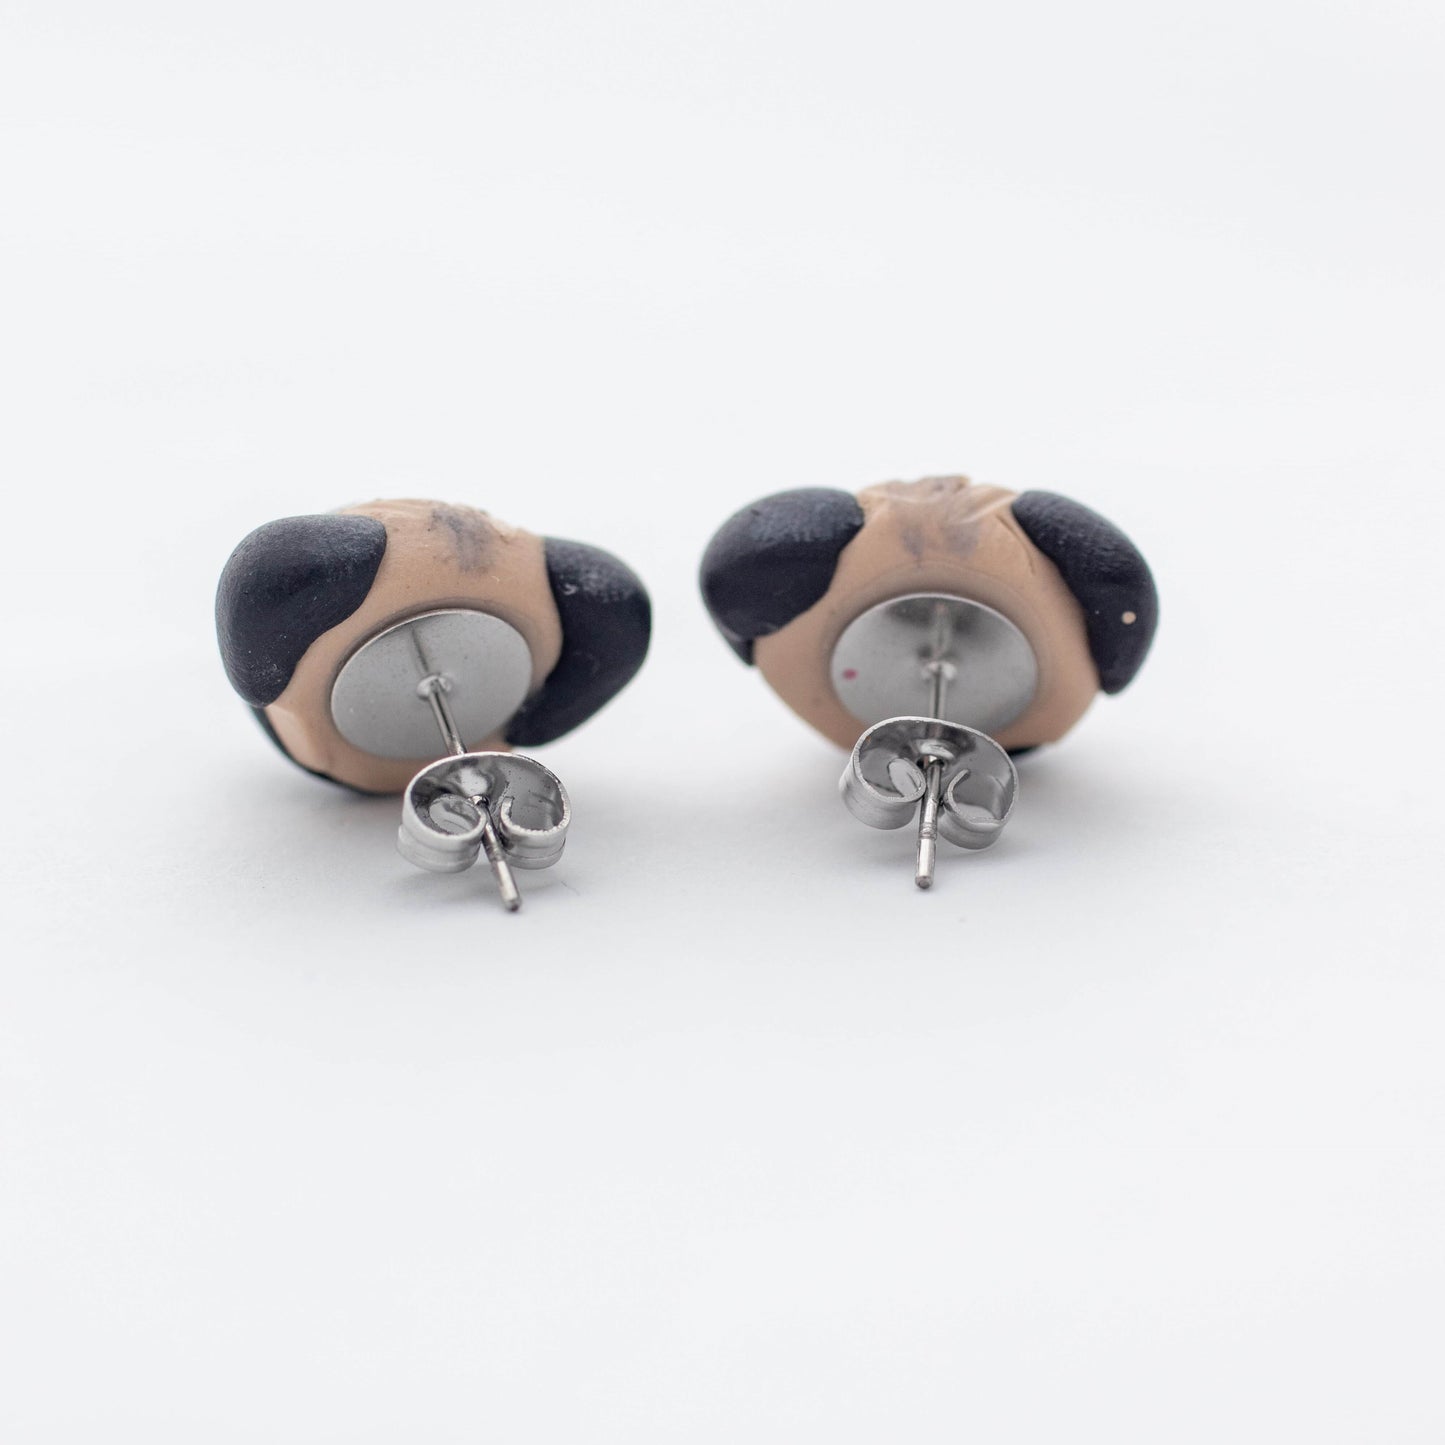 Handmade polymer clay pug stud earrings showing surgical steel backs